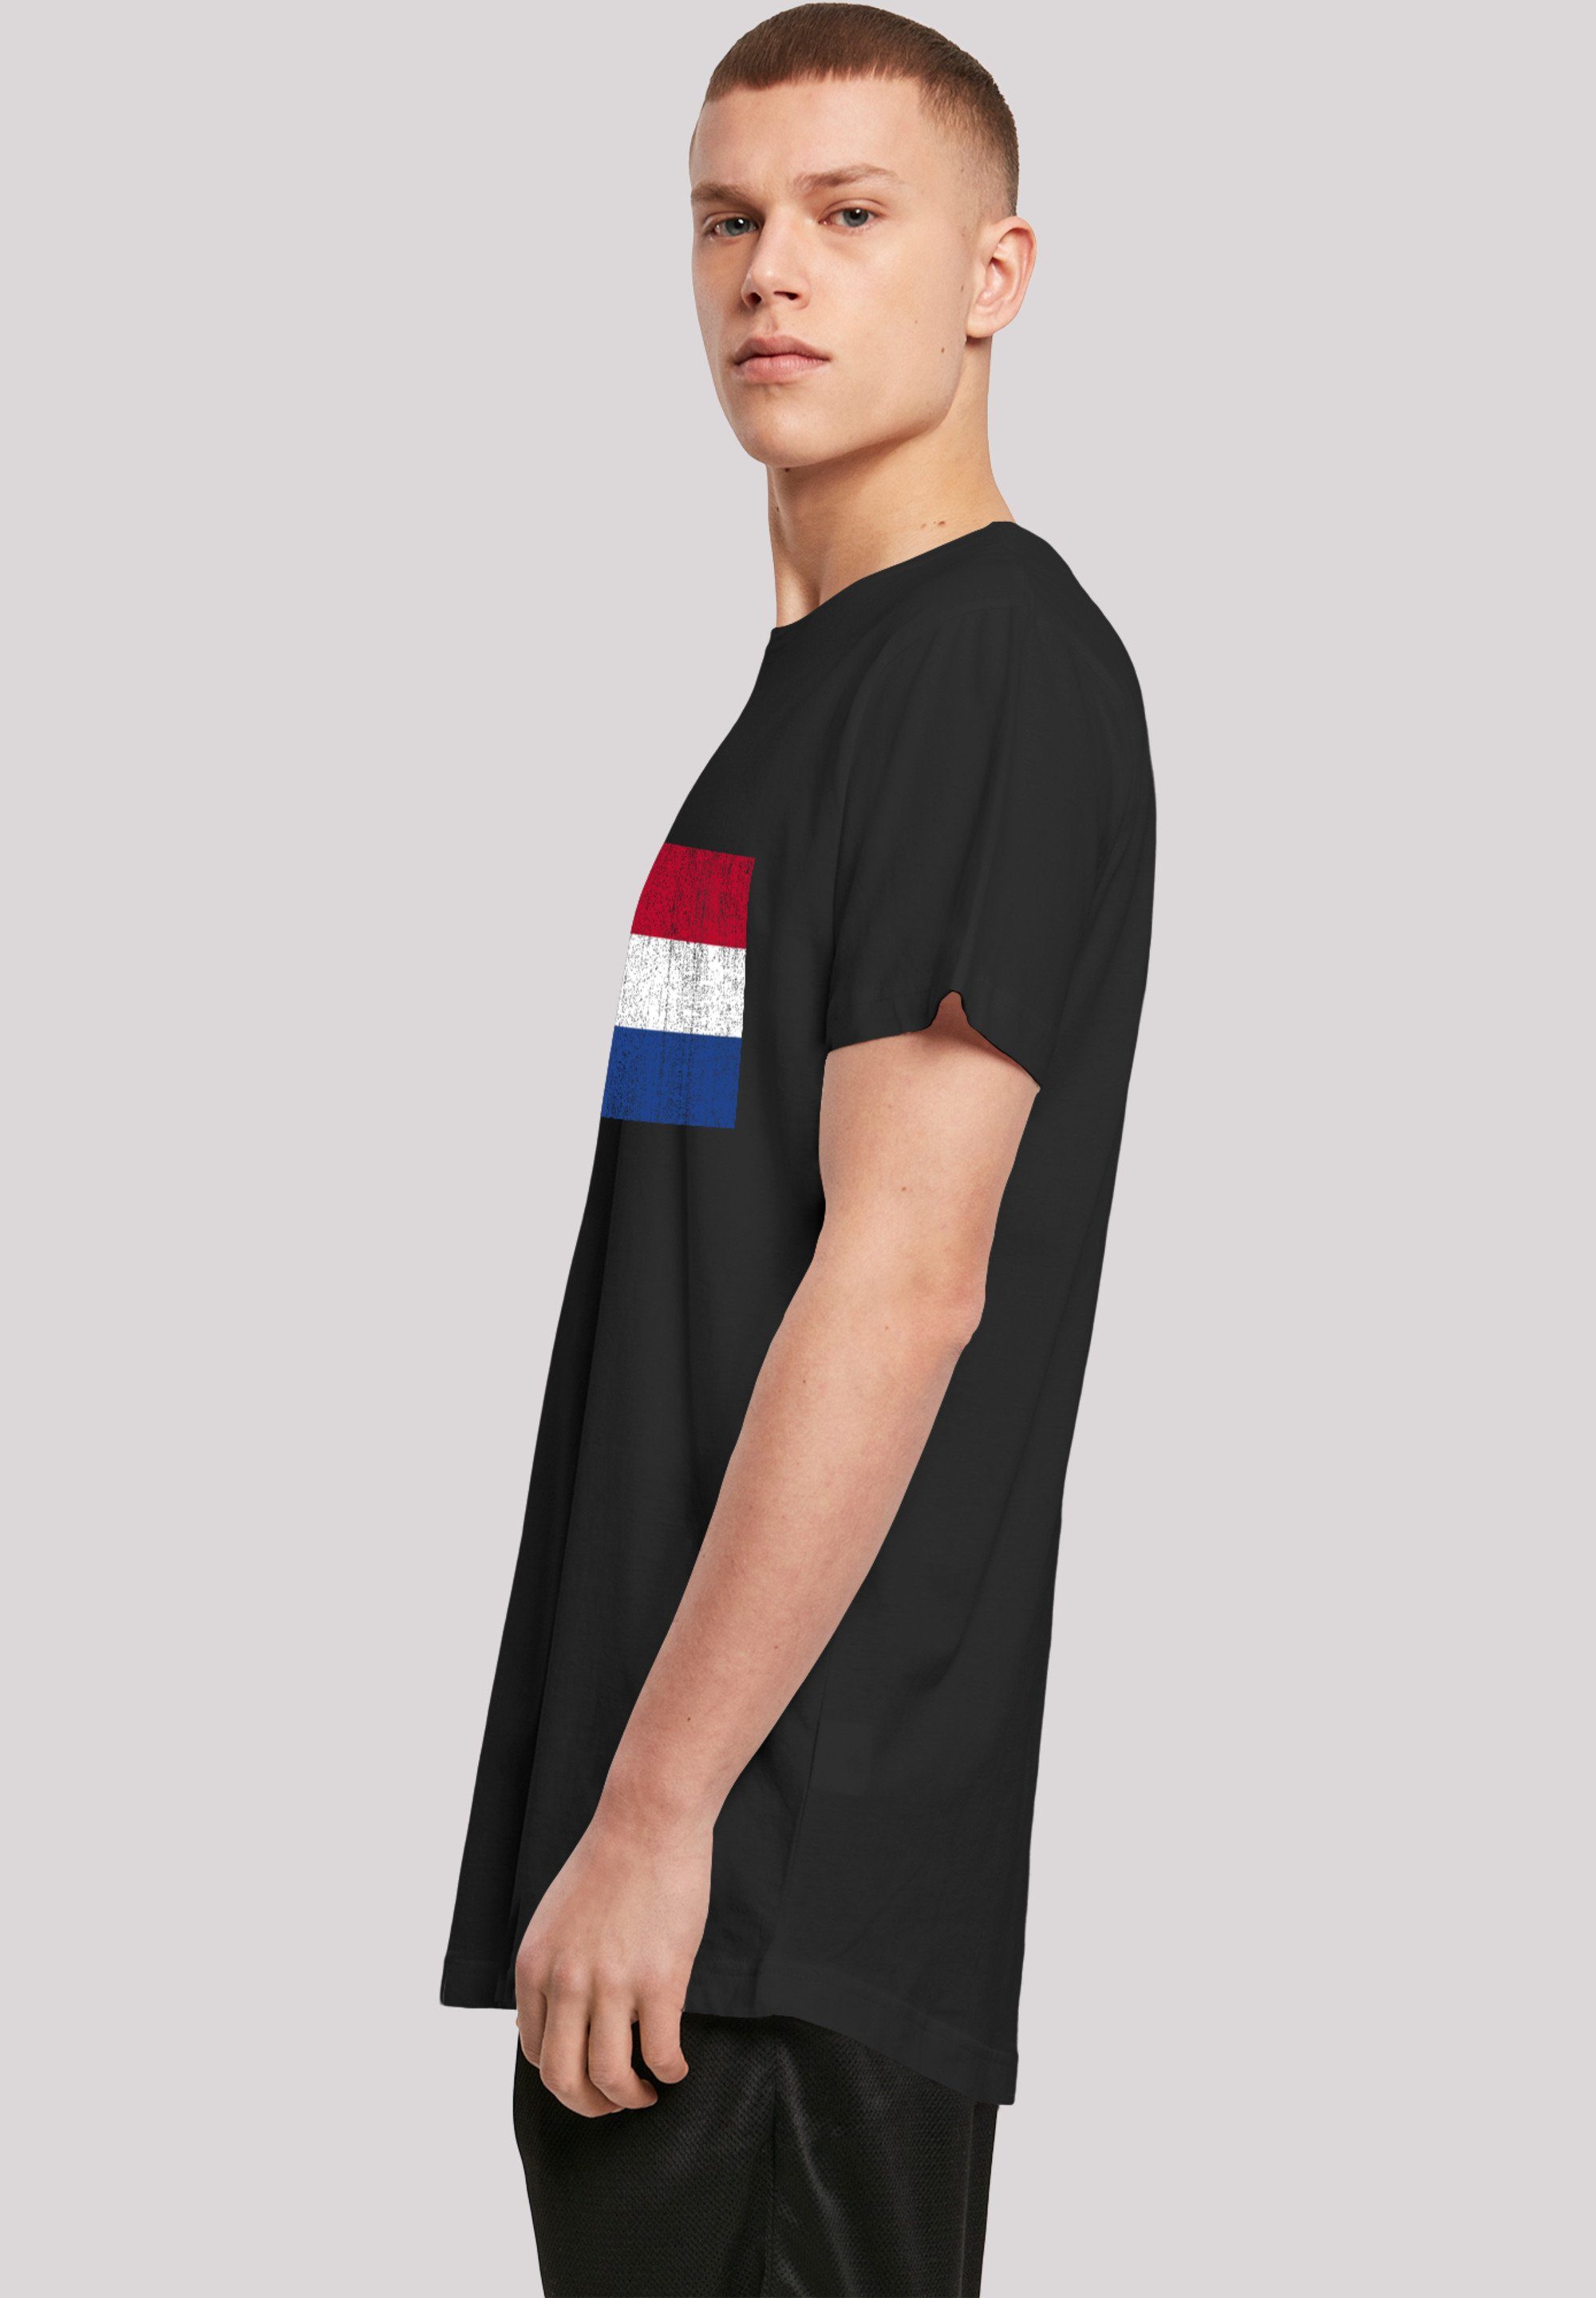 F4NT4STIC NIederlande Flagge Holland Print schwarz T-Shirt Netherlands distressed